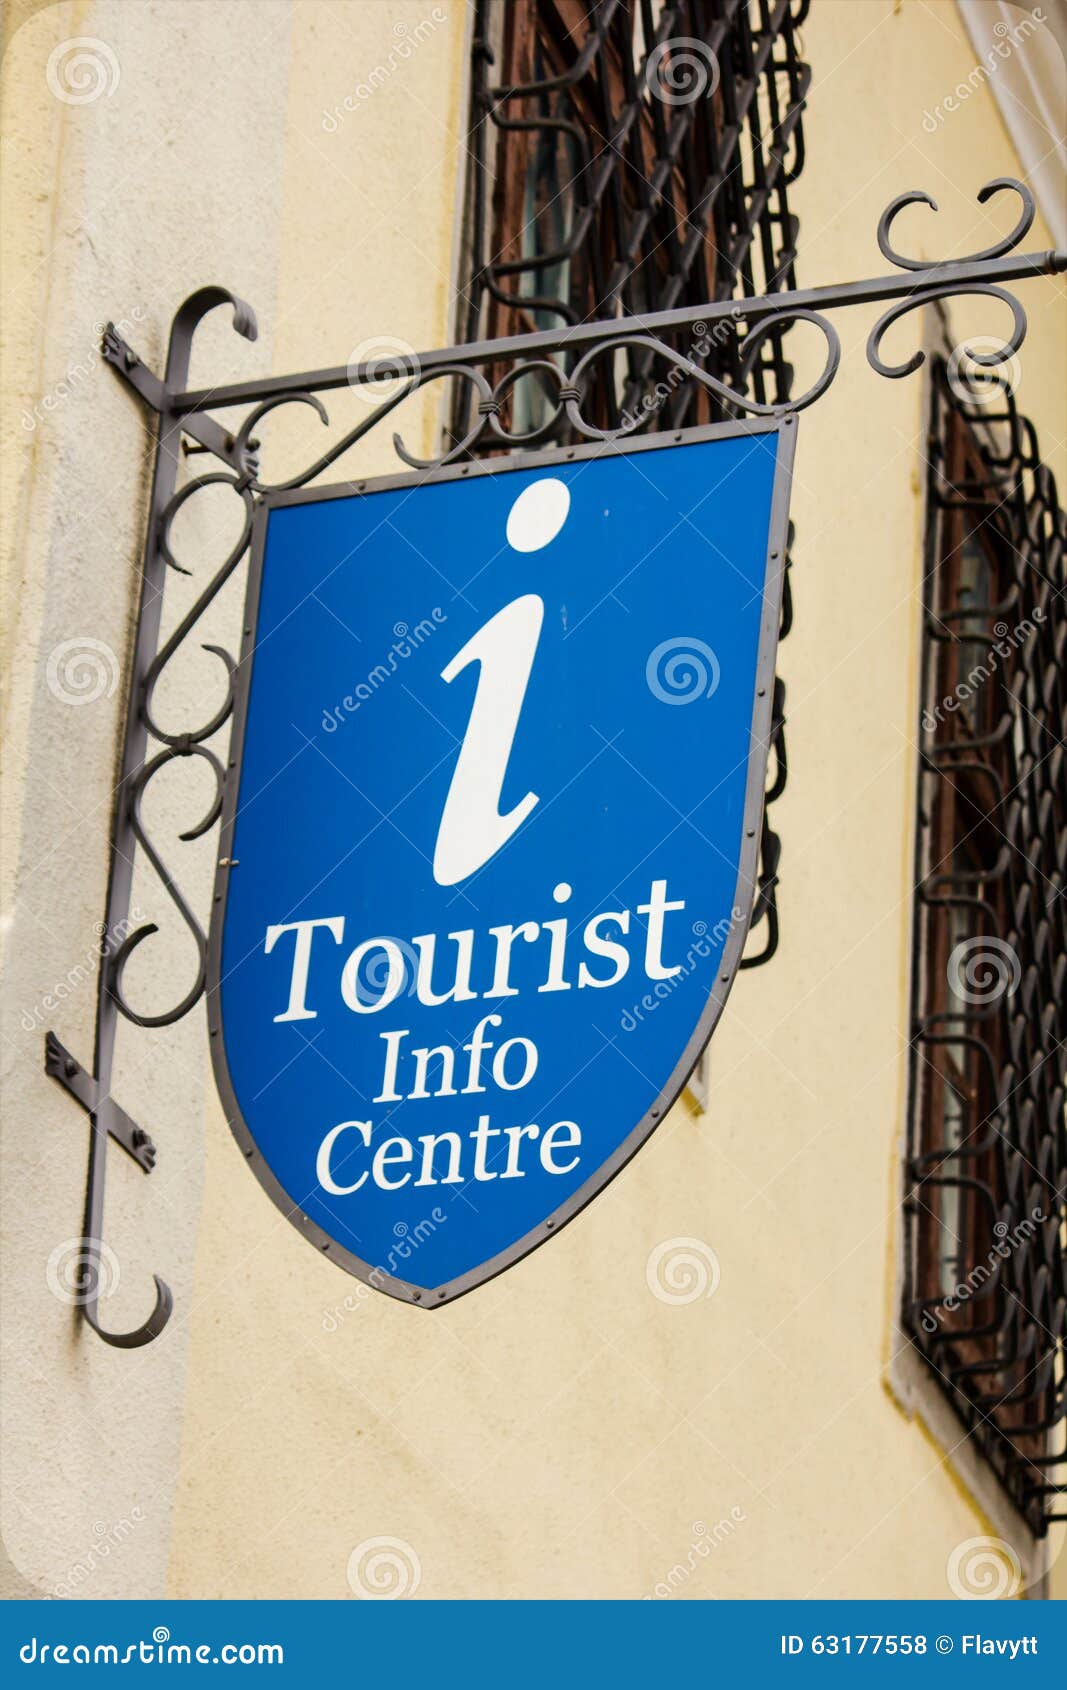 tourist information centre sign